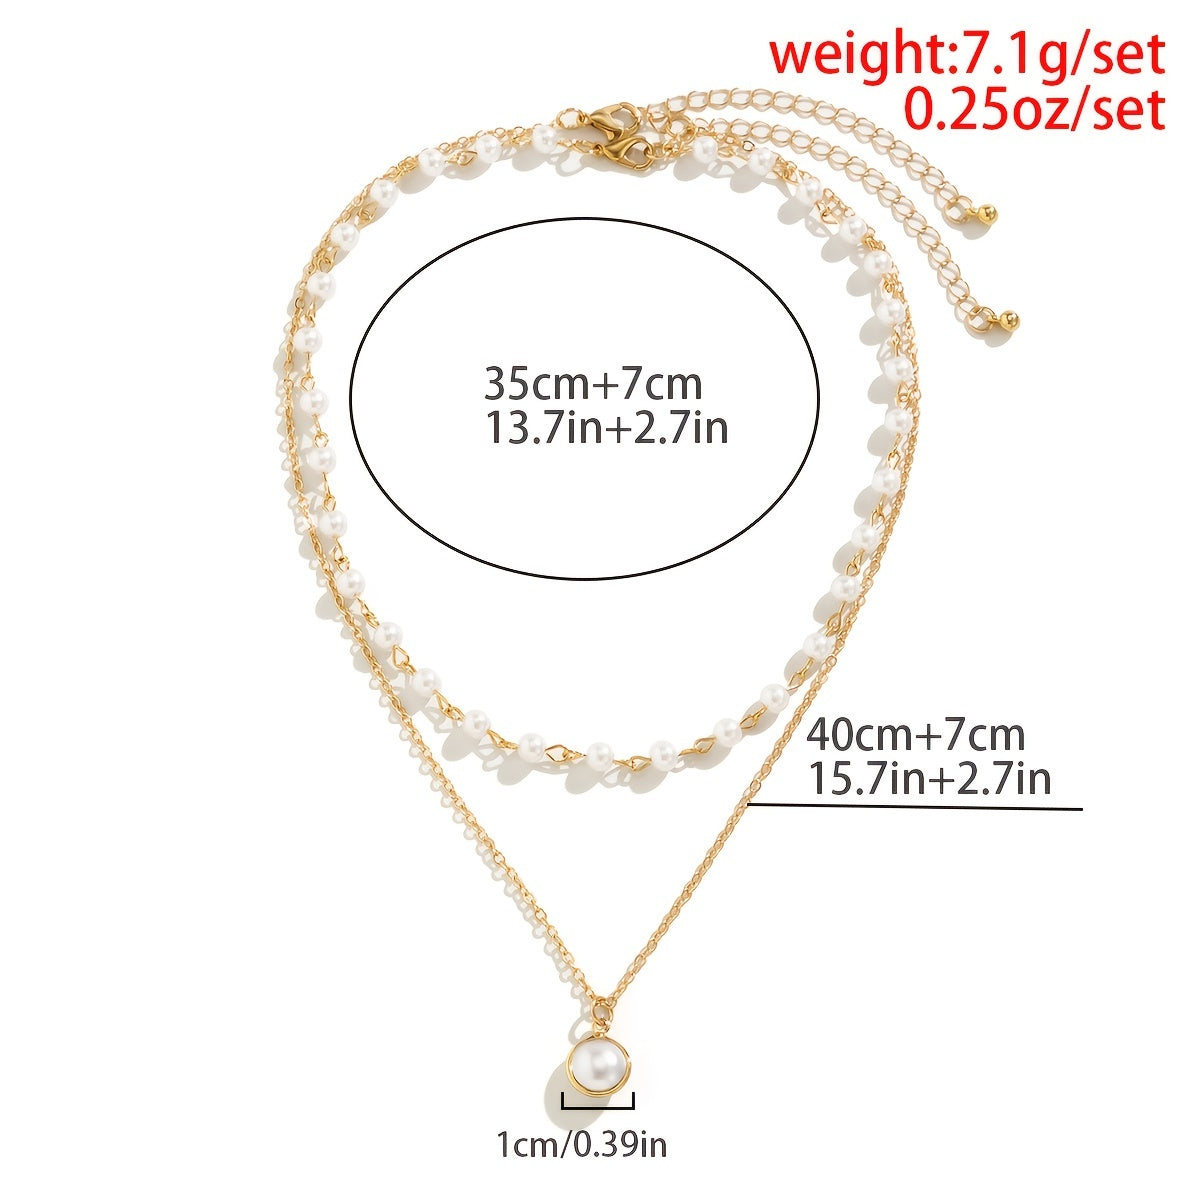 Gorgeous Faux Pearl Necklace Set - 2 Pcs Detachable & Combinable Copper Jewelry for Women & Girls